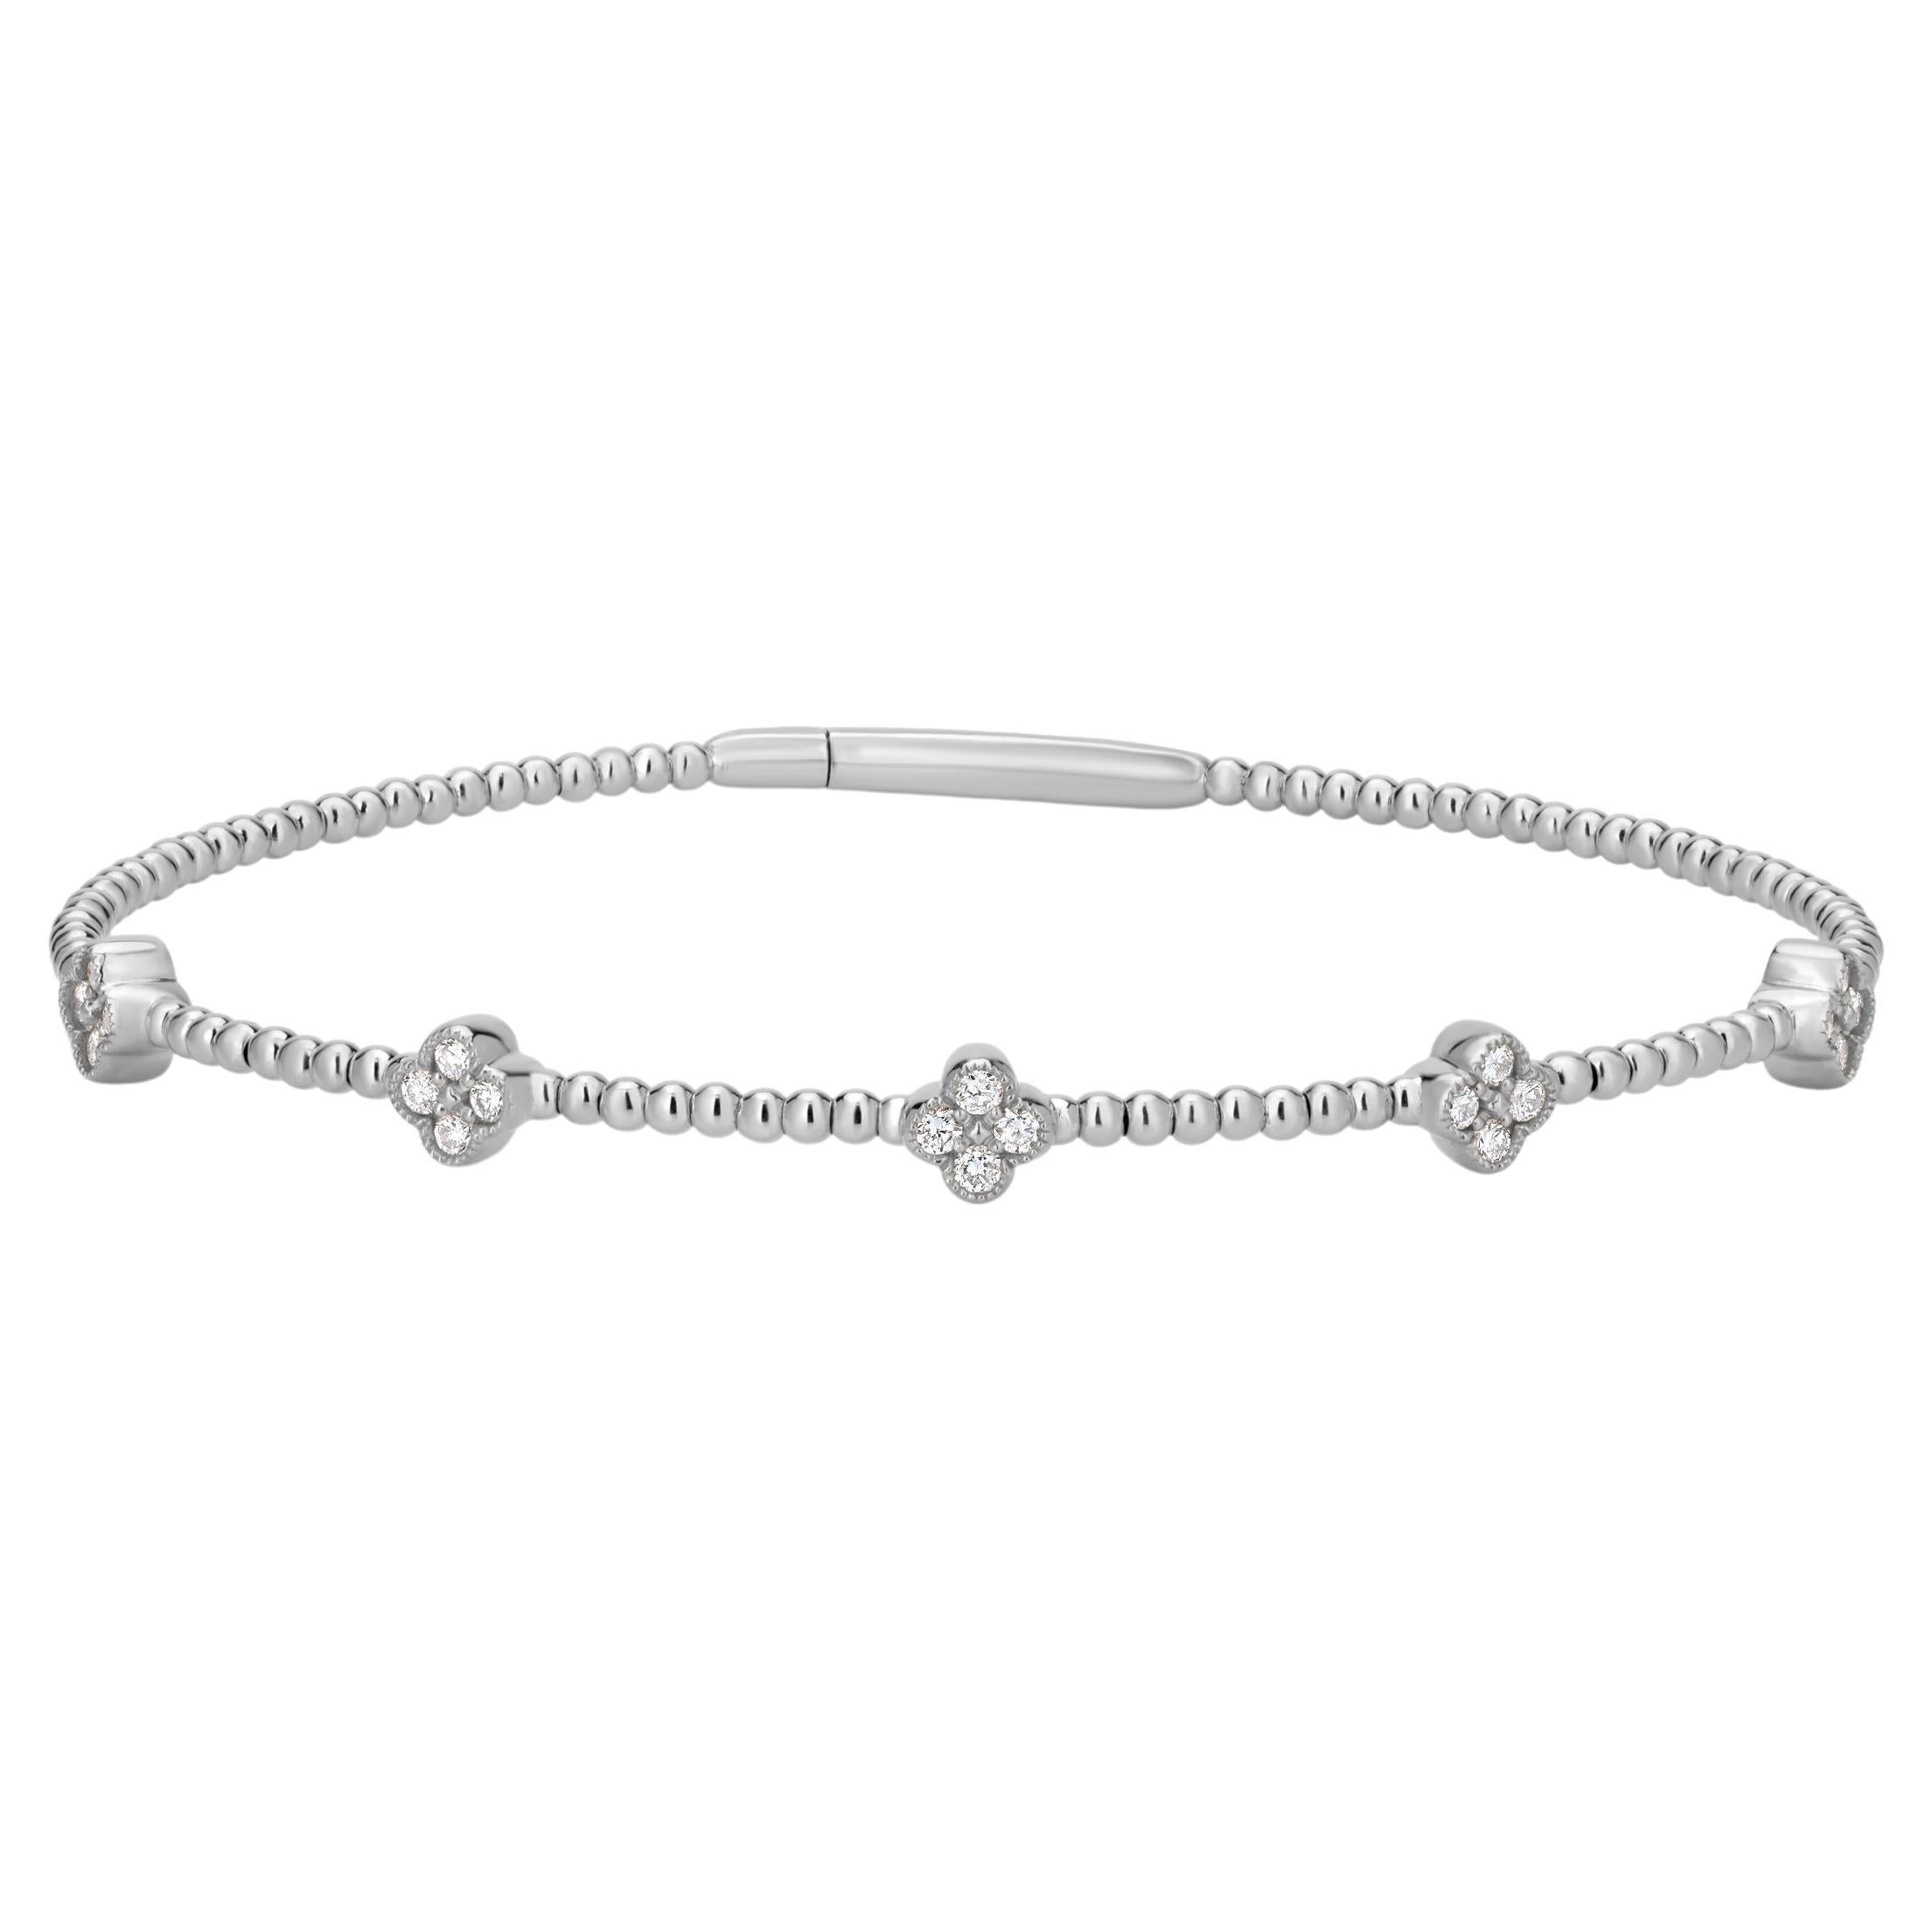 Luxle 0.32 Carat T.W. Diamond Station Bangle Bracelet in 18k White Gold For Sale